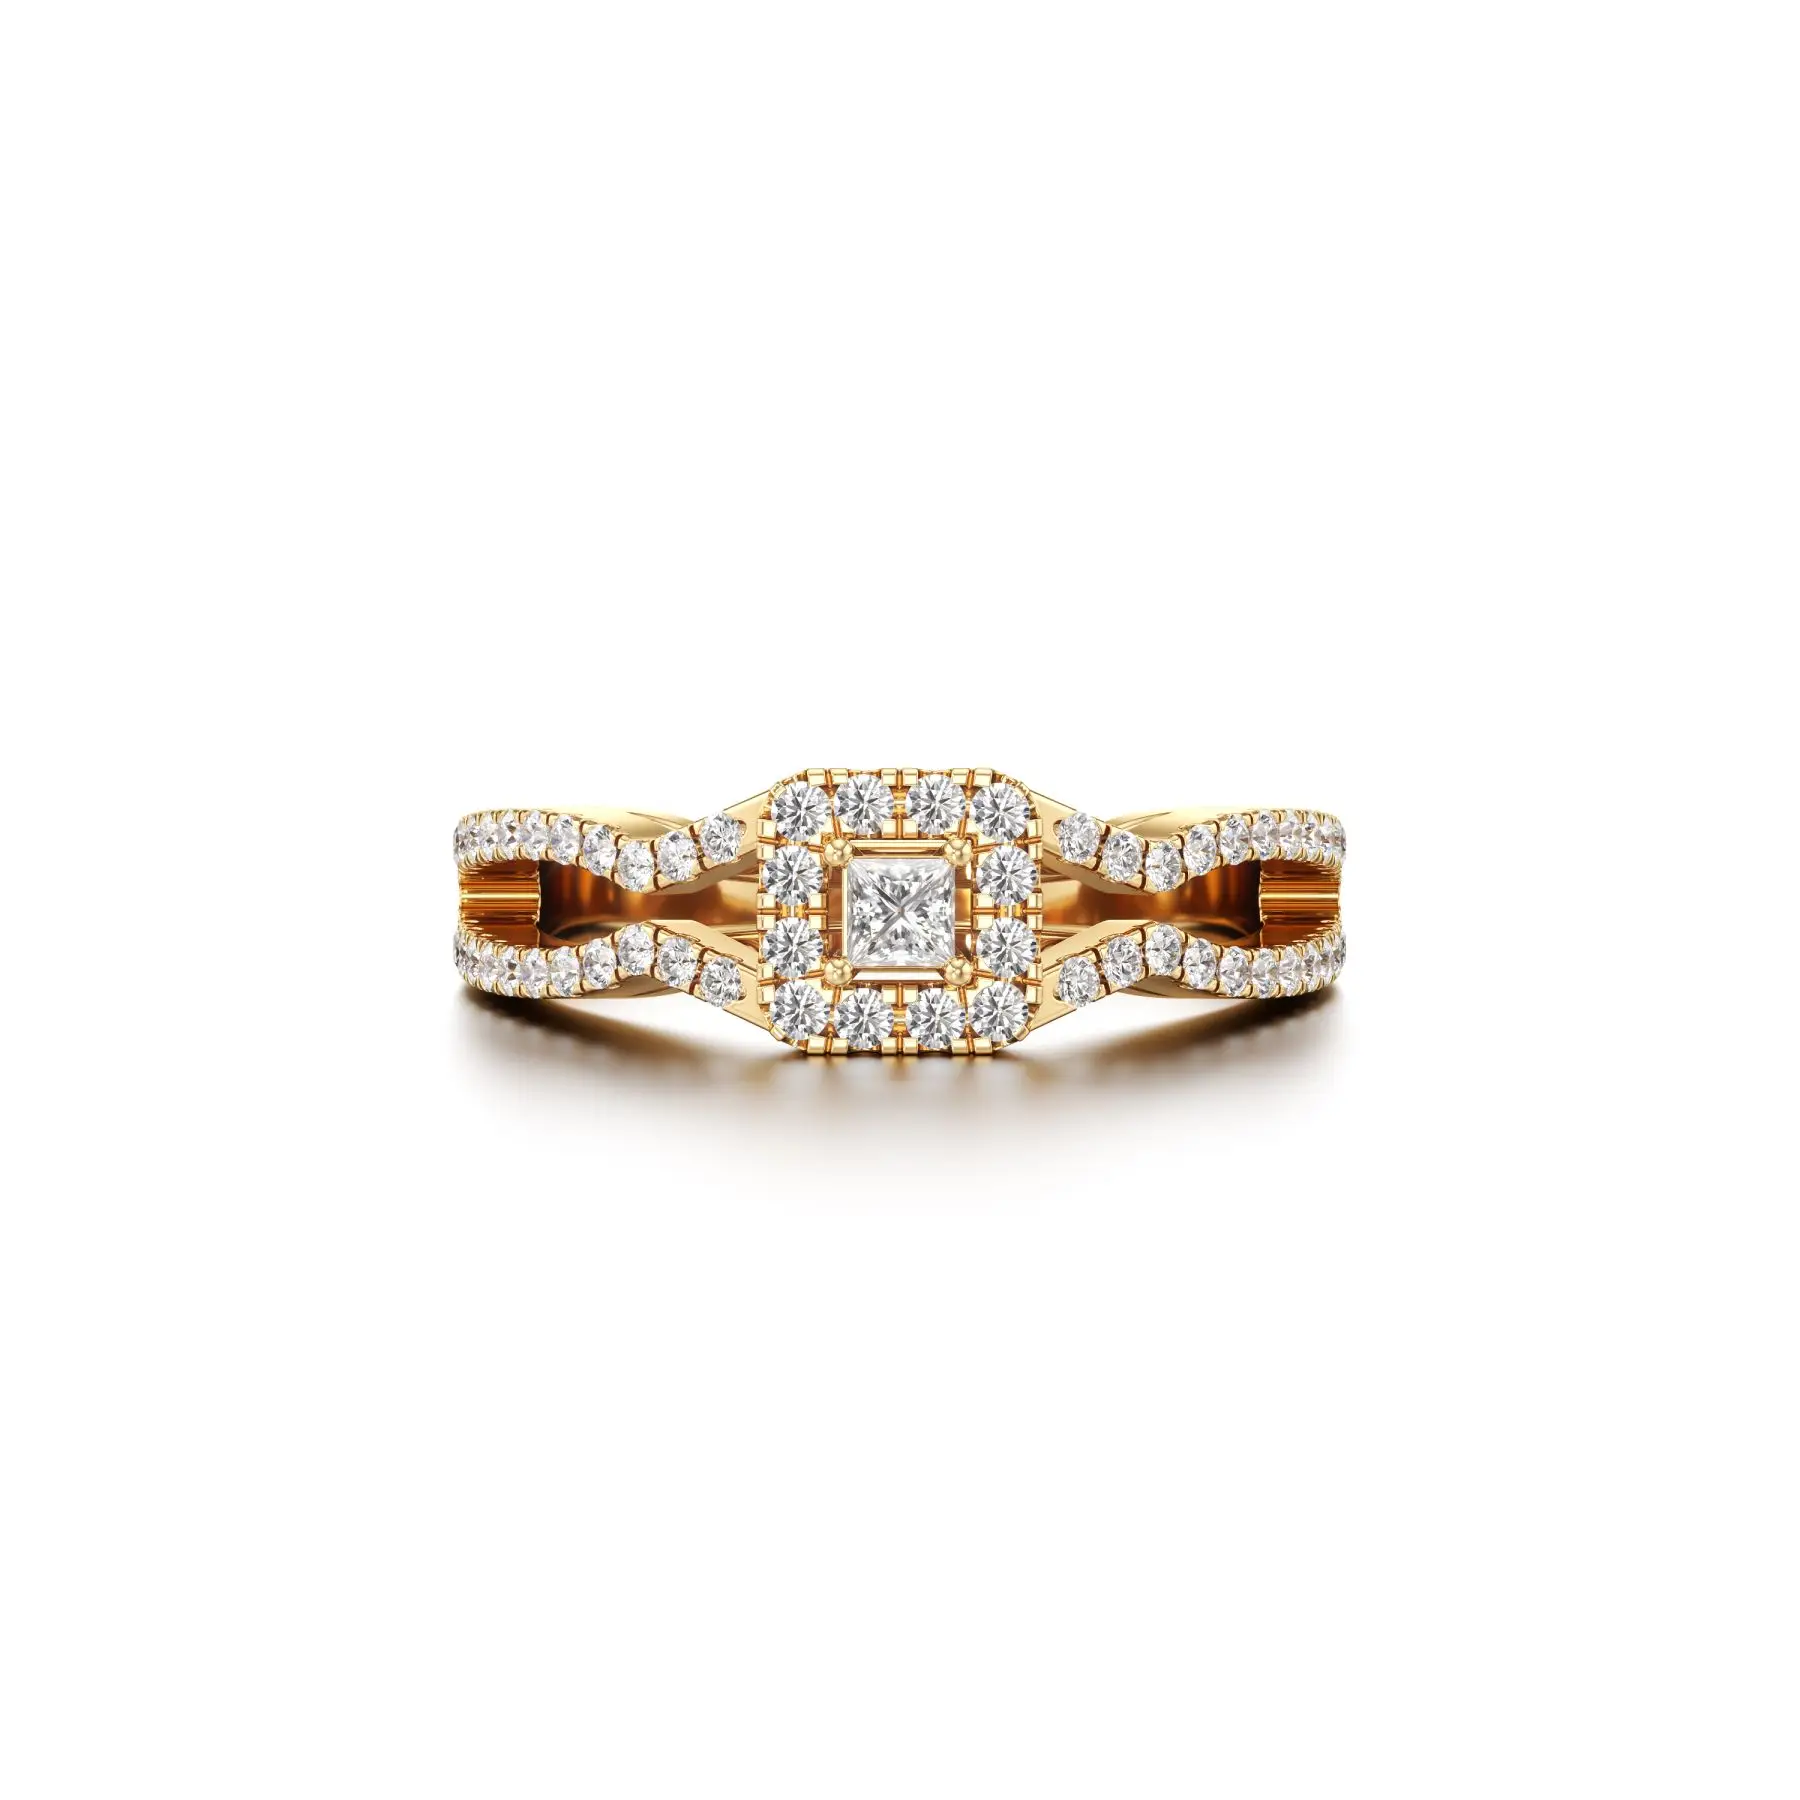 Wavy Gliss Diamond Ring in Yellow 10k Gold